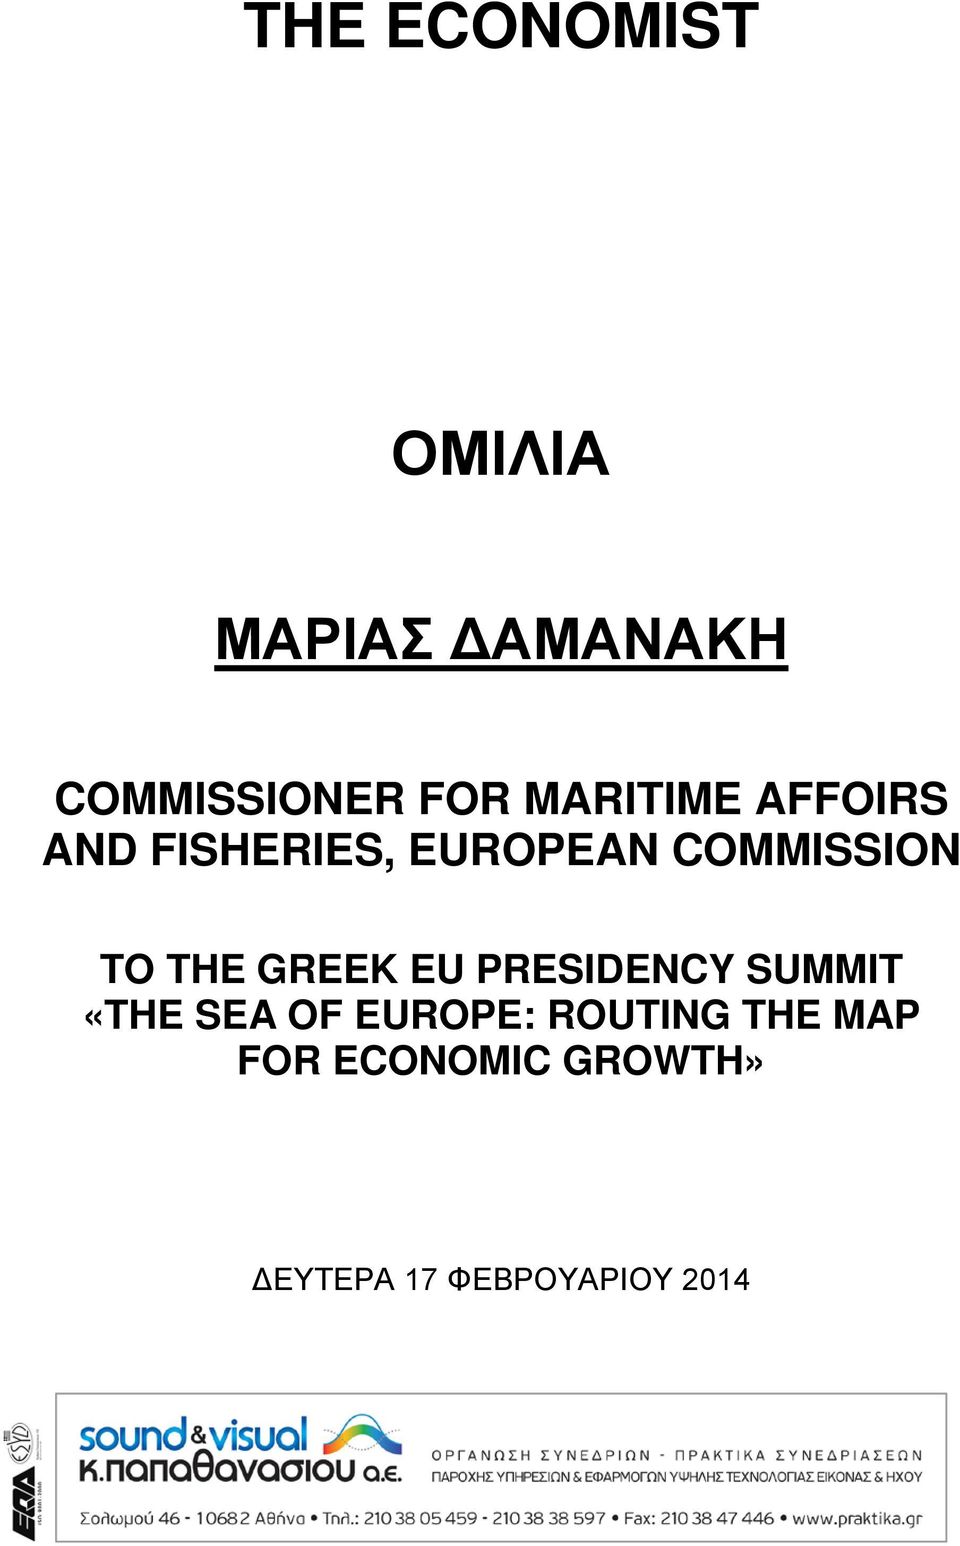 THE GREEK EU PRESIDENCY SUMMIT «THE SEA OF EUROPE: